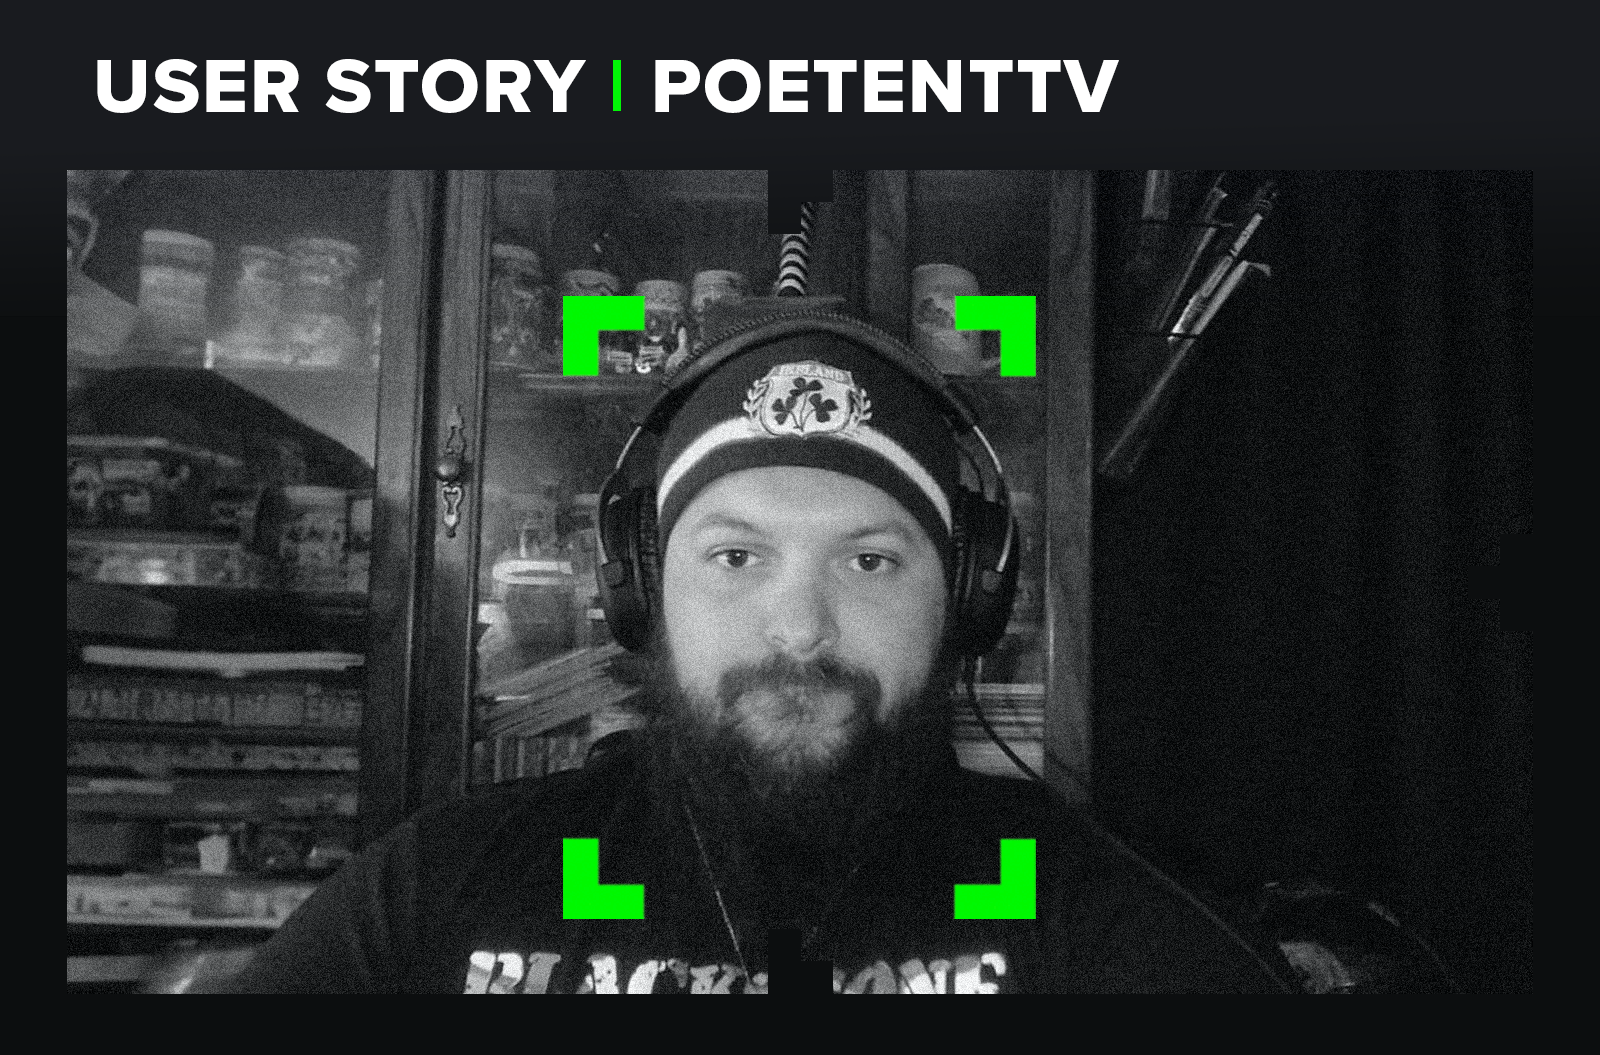 Poetenttv - User Story